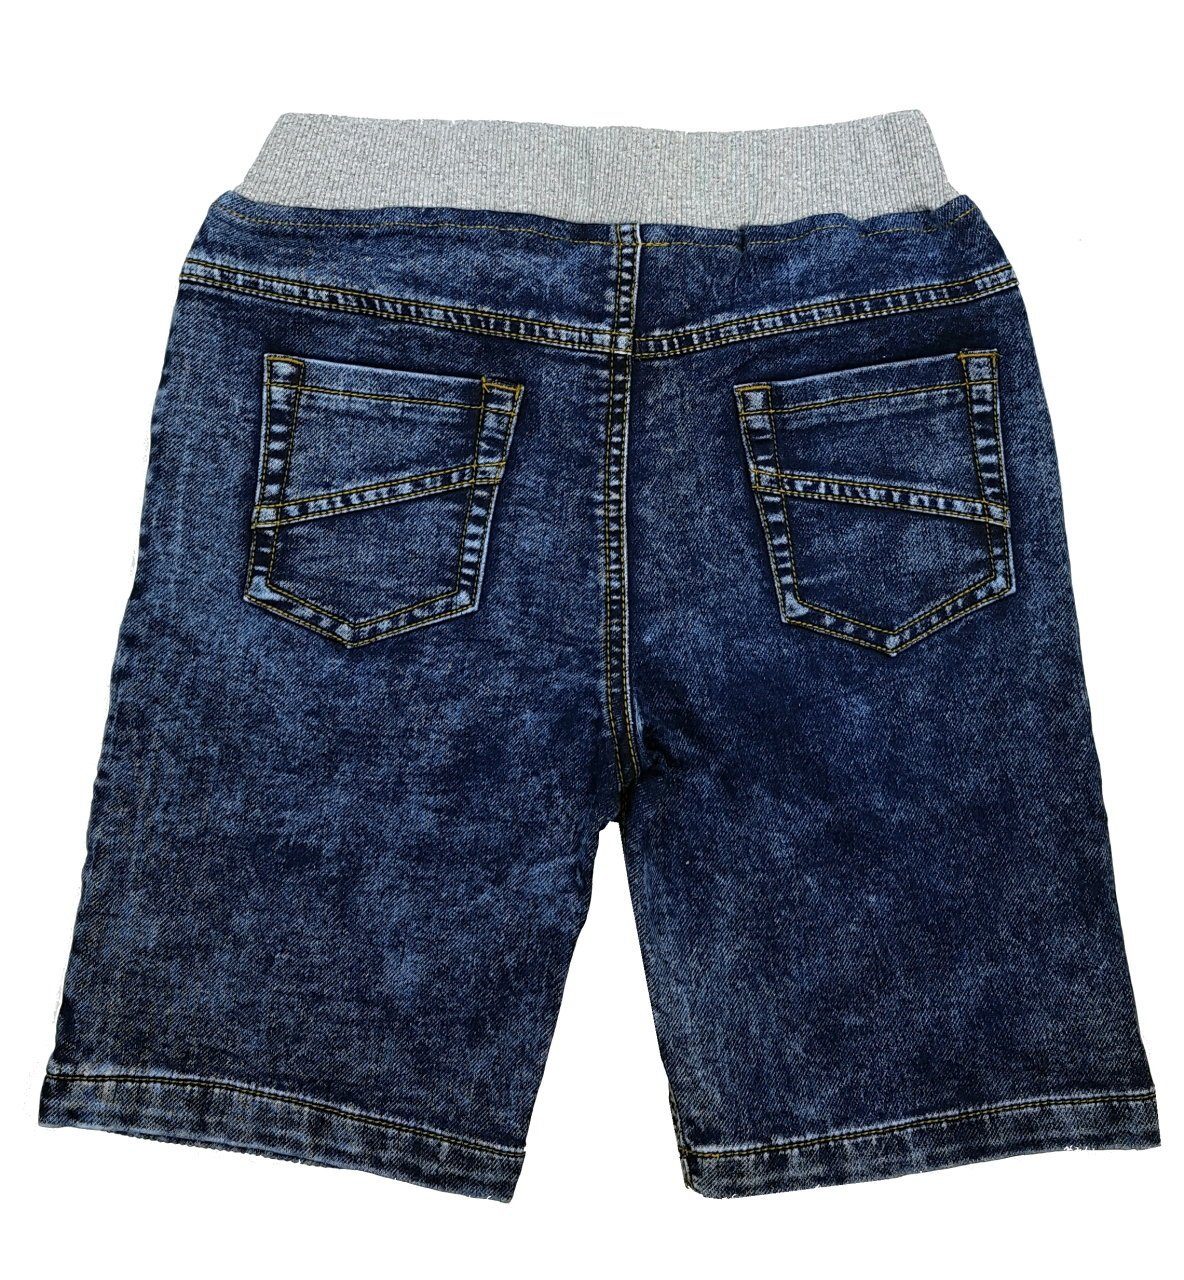 Fashion Boy Jogg-Jeansbermudas Stretch Bermuda Sommerhose, Hose, Jn206 Jeans